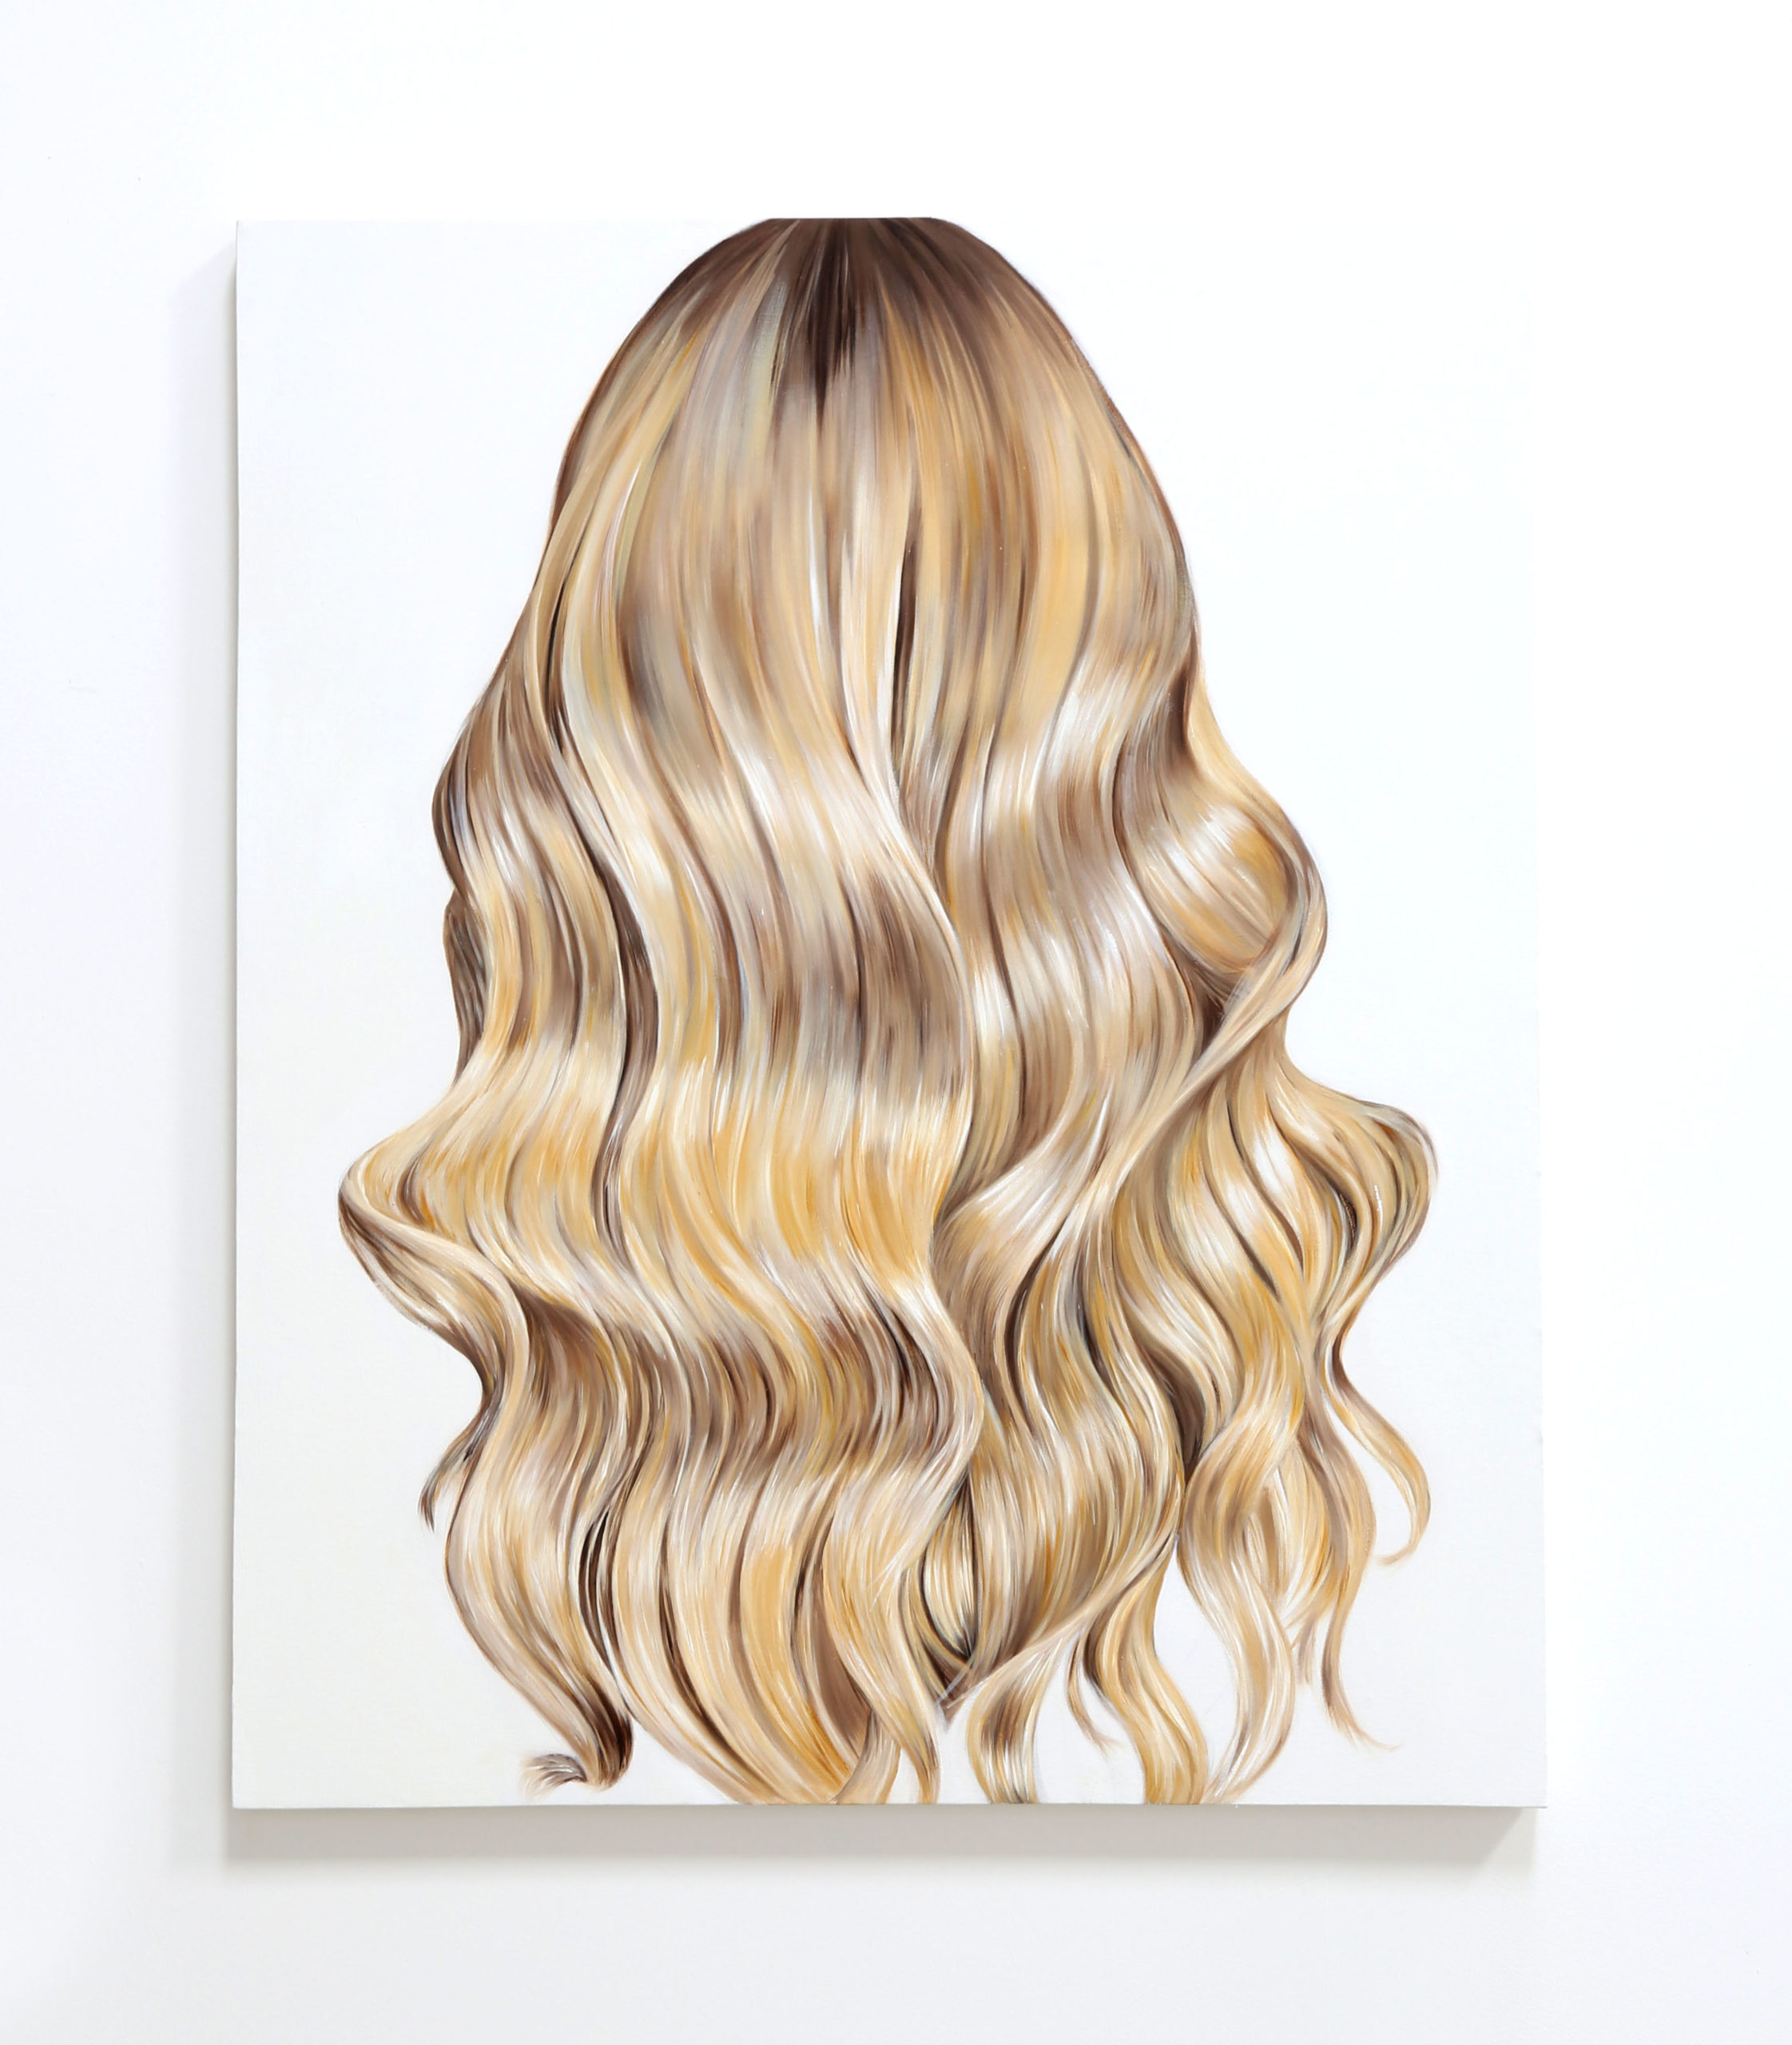 Good Hair Day series, oil on canvas, 130 x 107 x 4cm, 2022.
